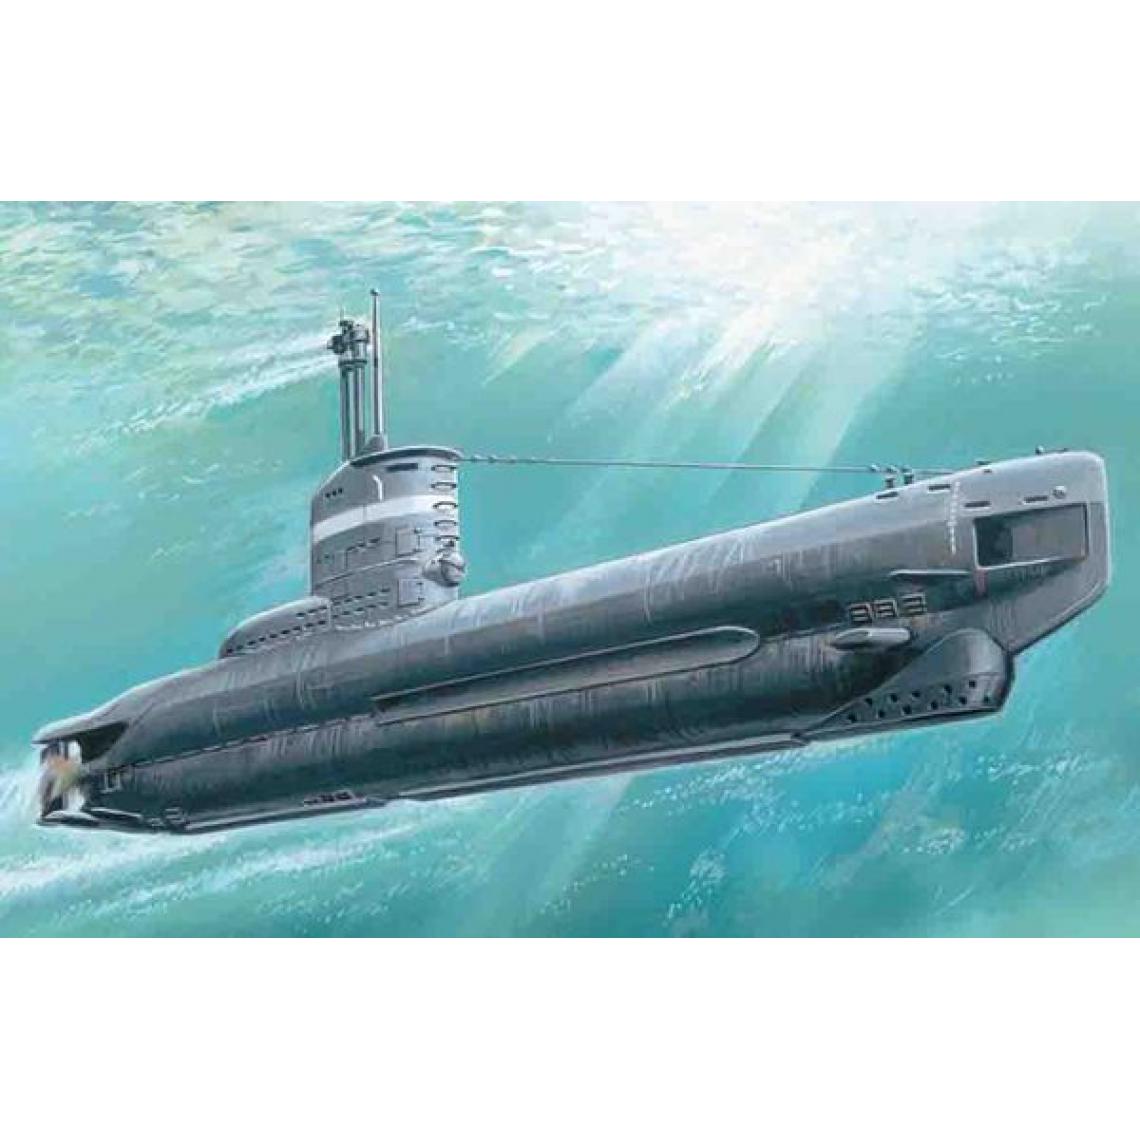 Icm - U-Boat Type XXIII, WWII German Submarine - 1:144e - ICM - Accessoires et pièces